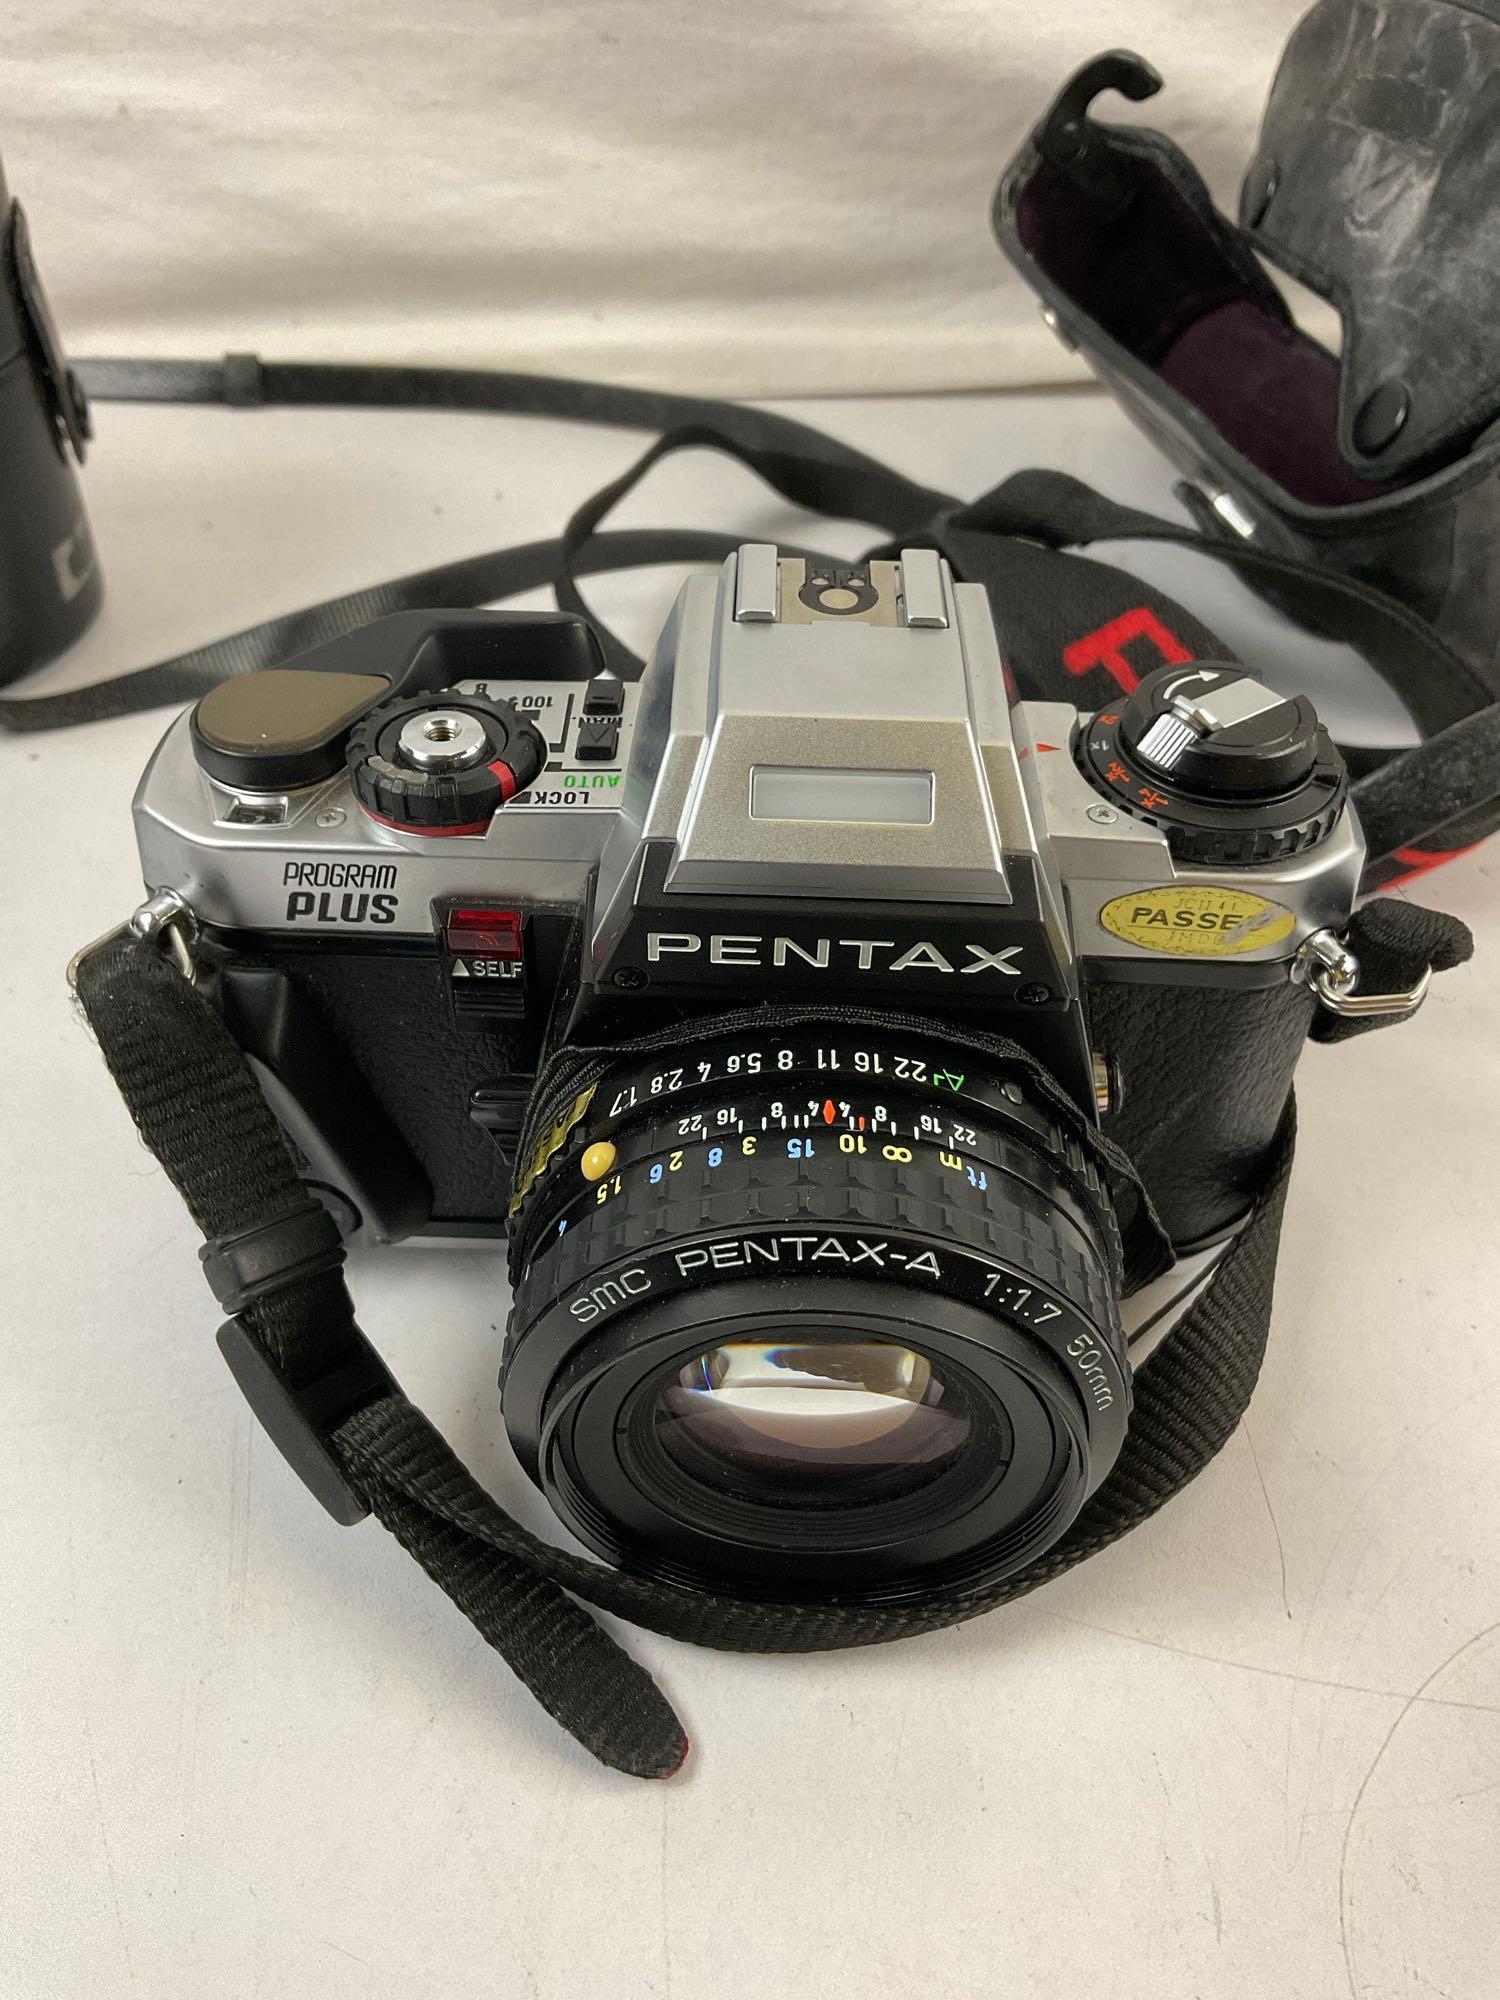 9 pcs Vintage Pentax Film Camera Assortment. Pentax Program Plus 35mm Camera. 3 Zooms. See pics.